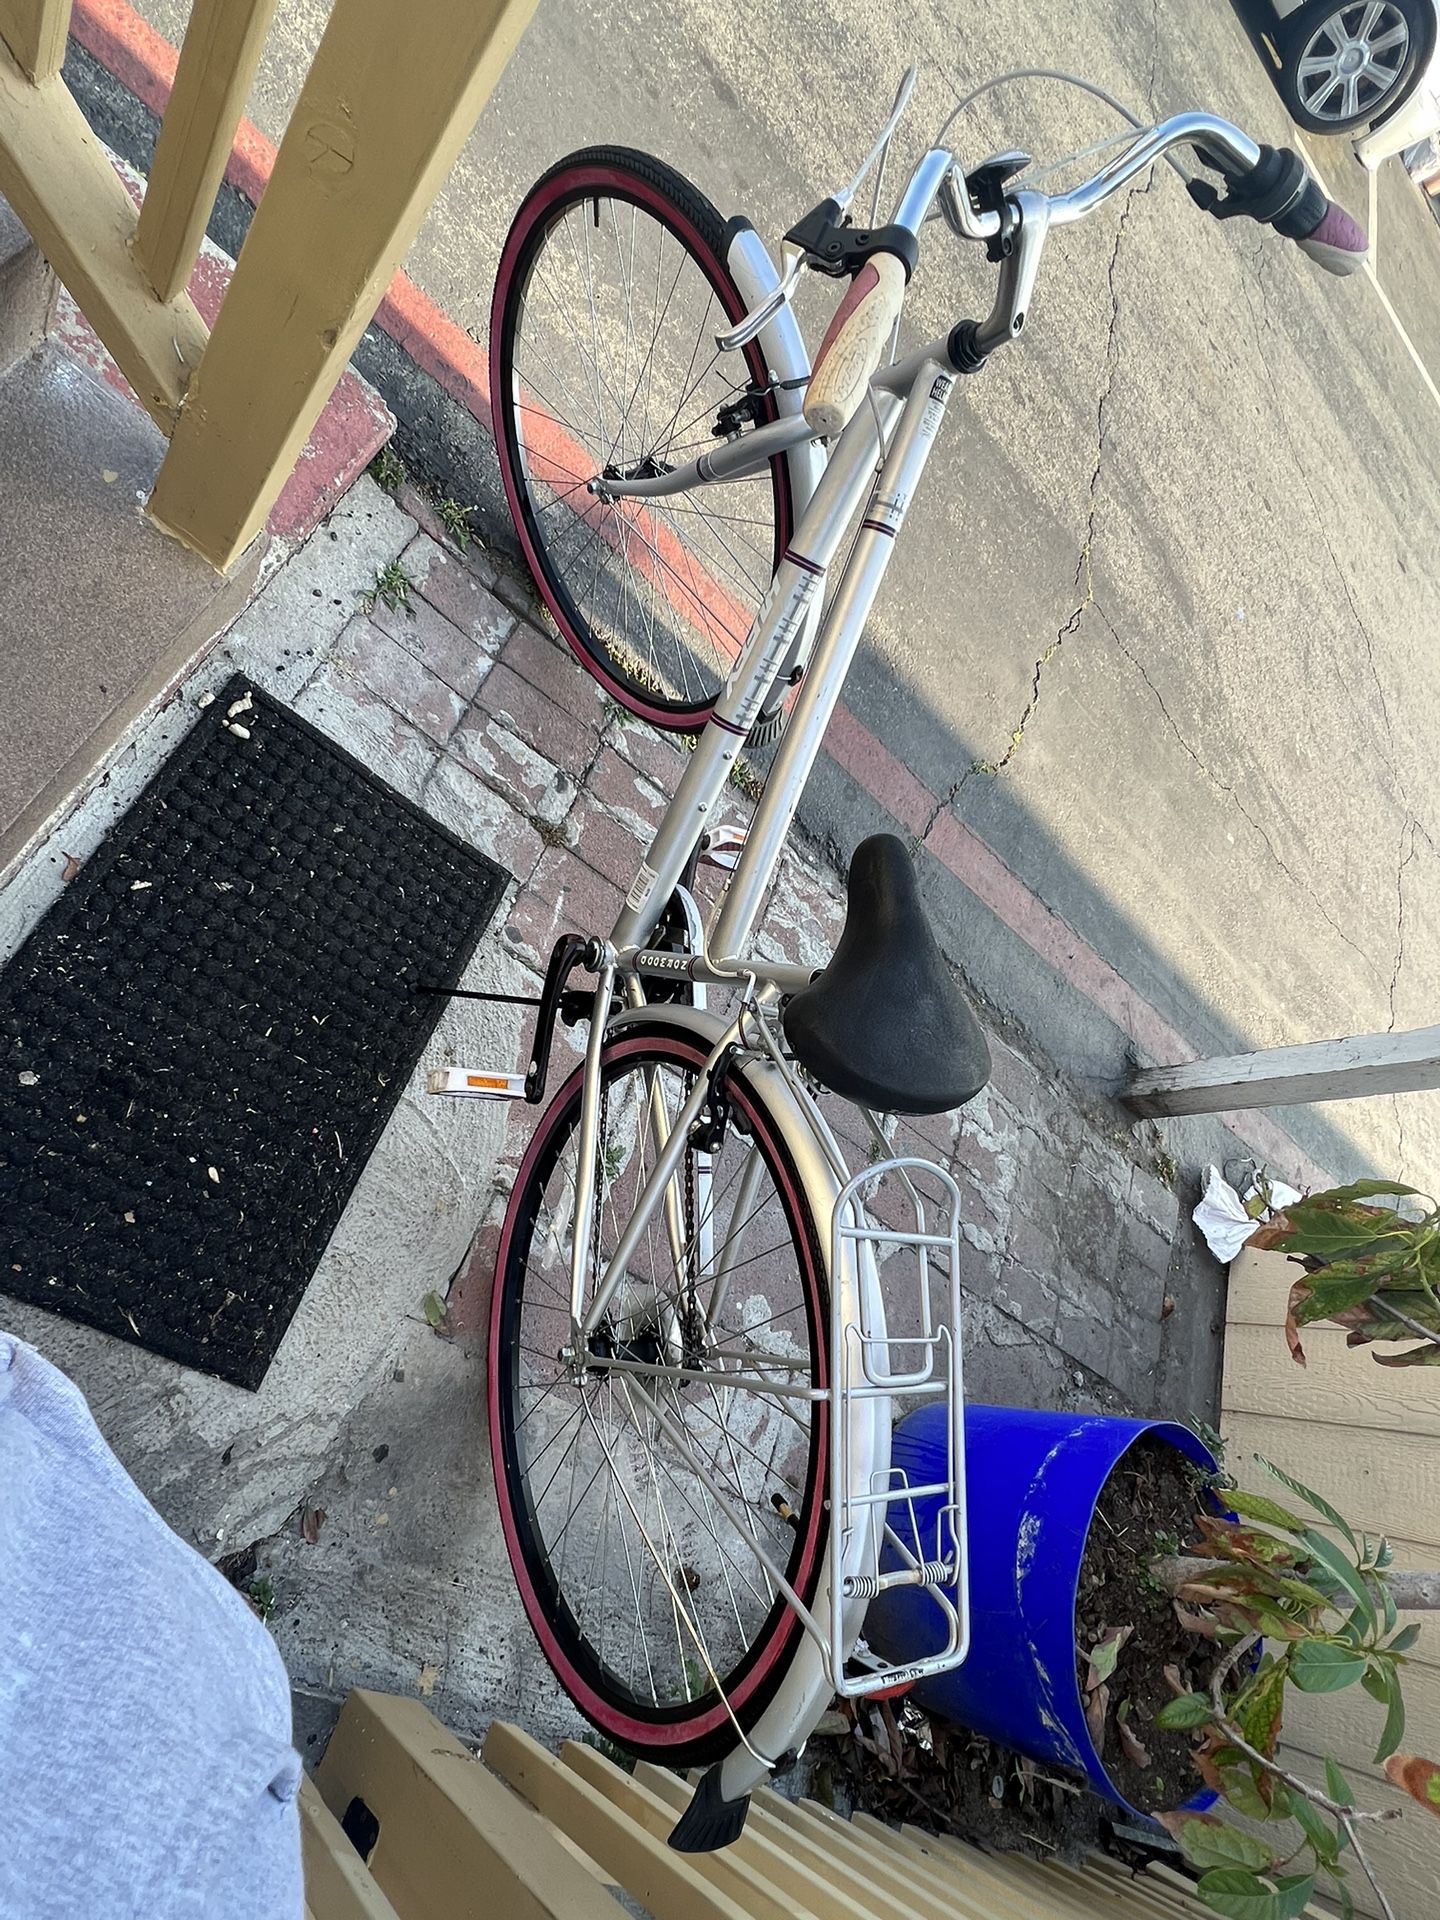 Beach Cruiser Bicycle